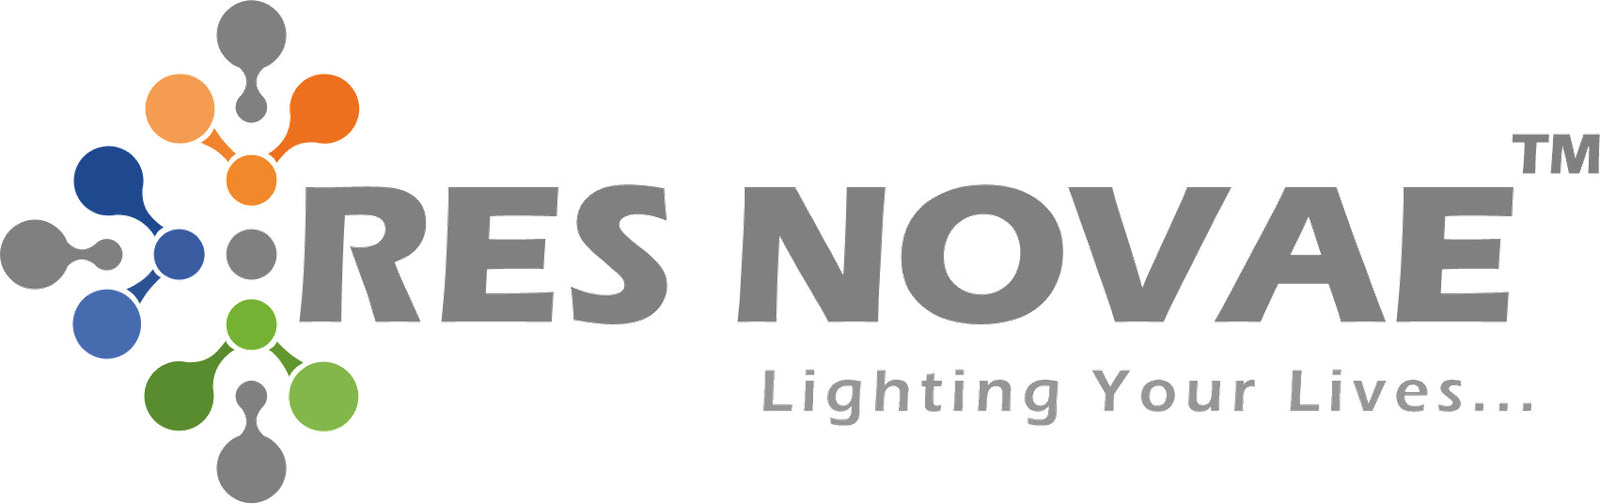 Amron Lighting Pvt Ltd